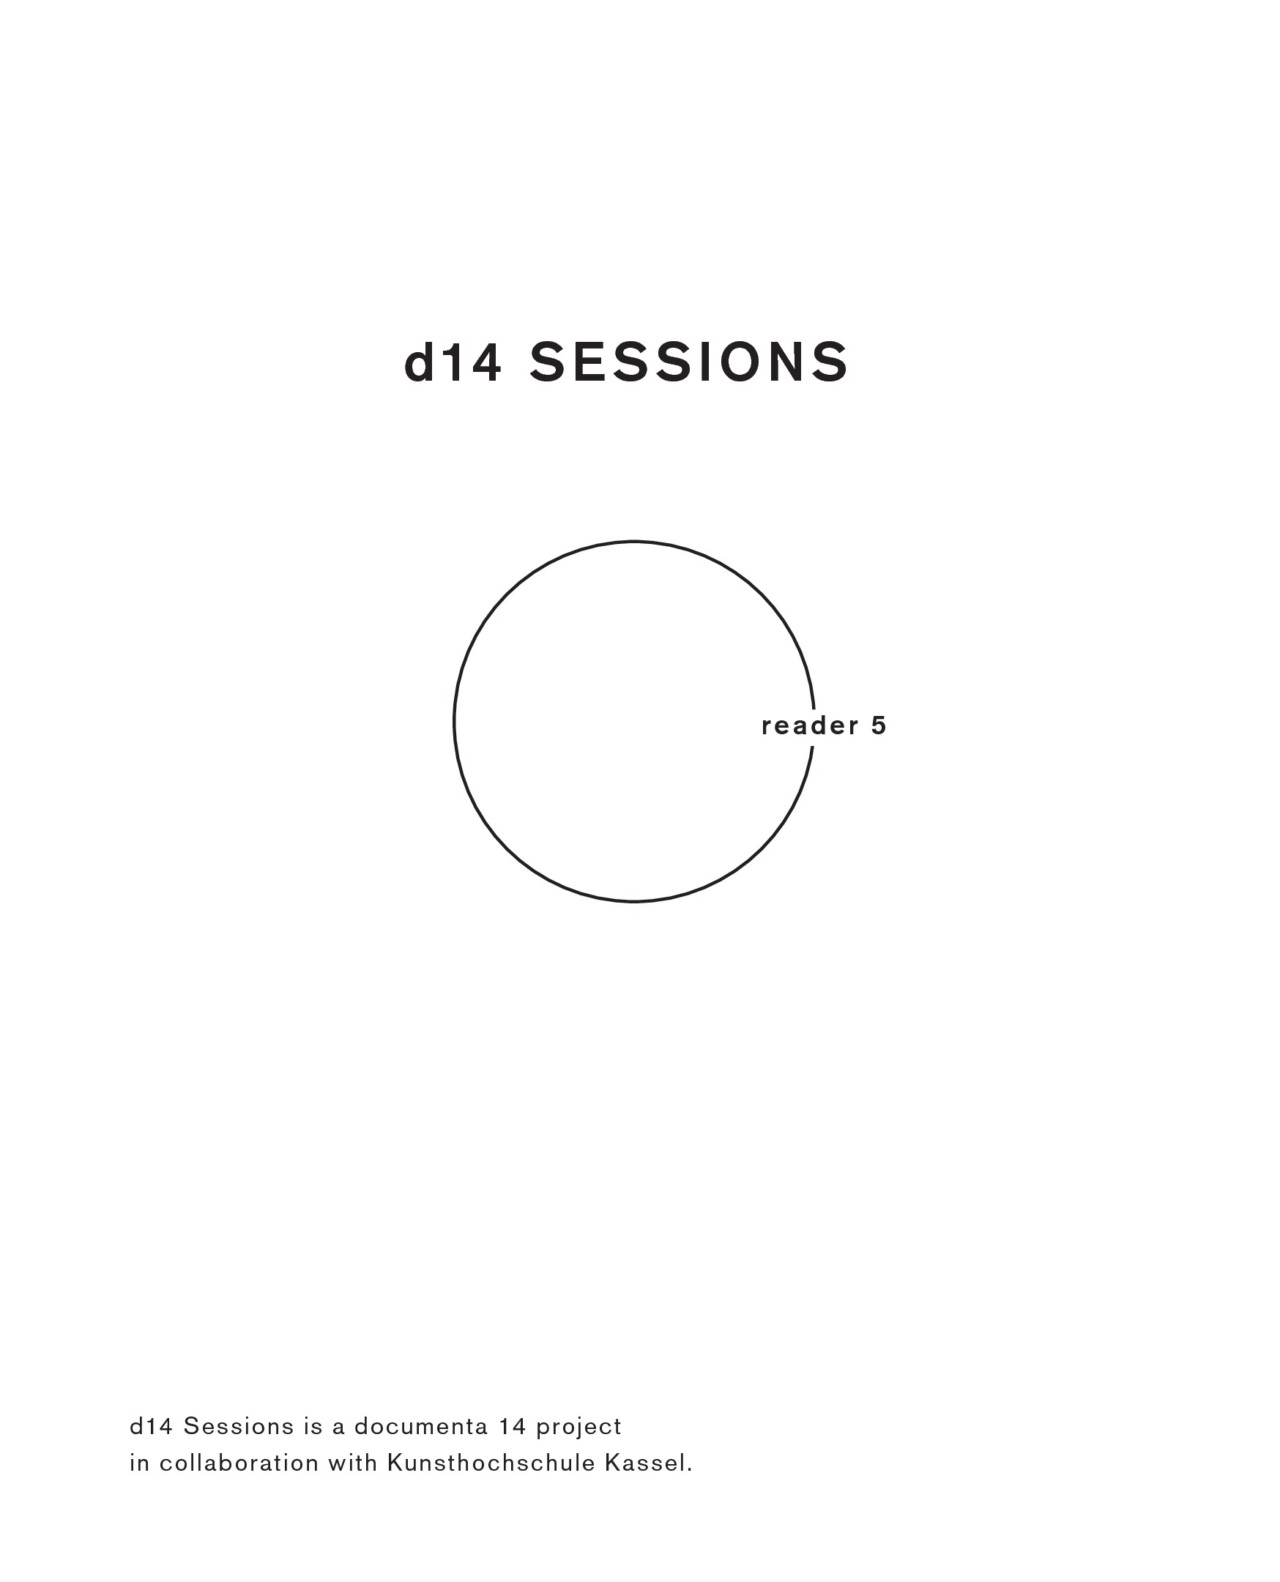 Membrane d14 SESSIONS #7 Natasha Ginwala, Curatorial Advisor, d14